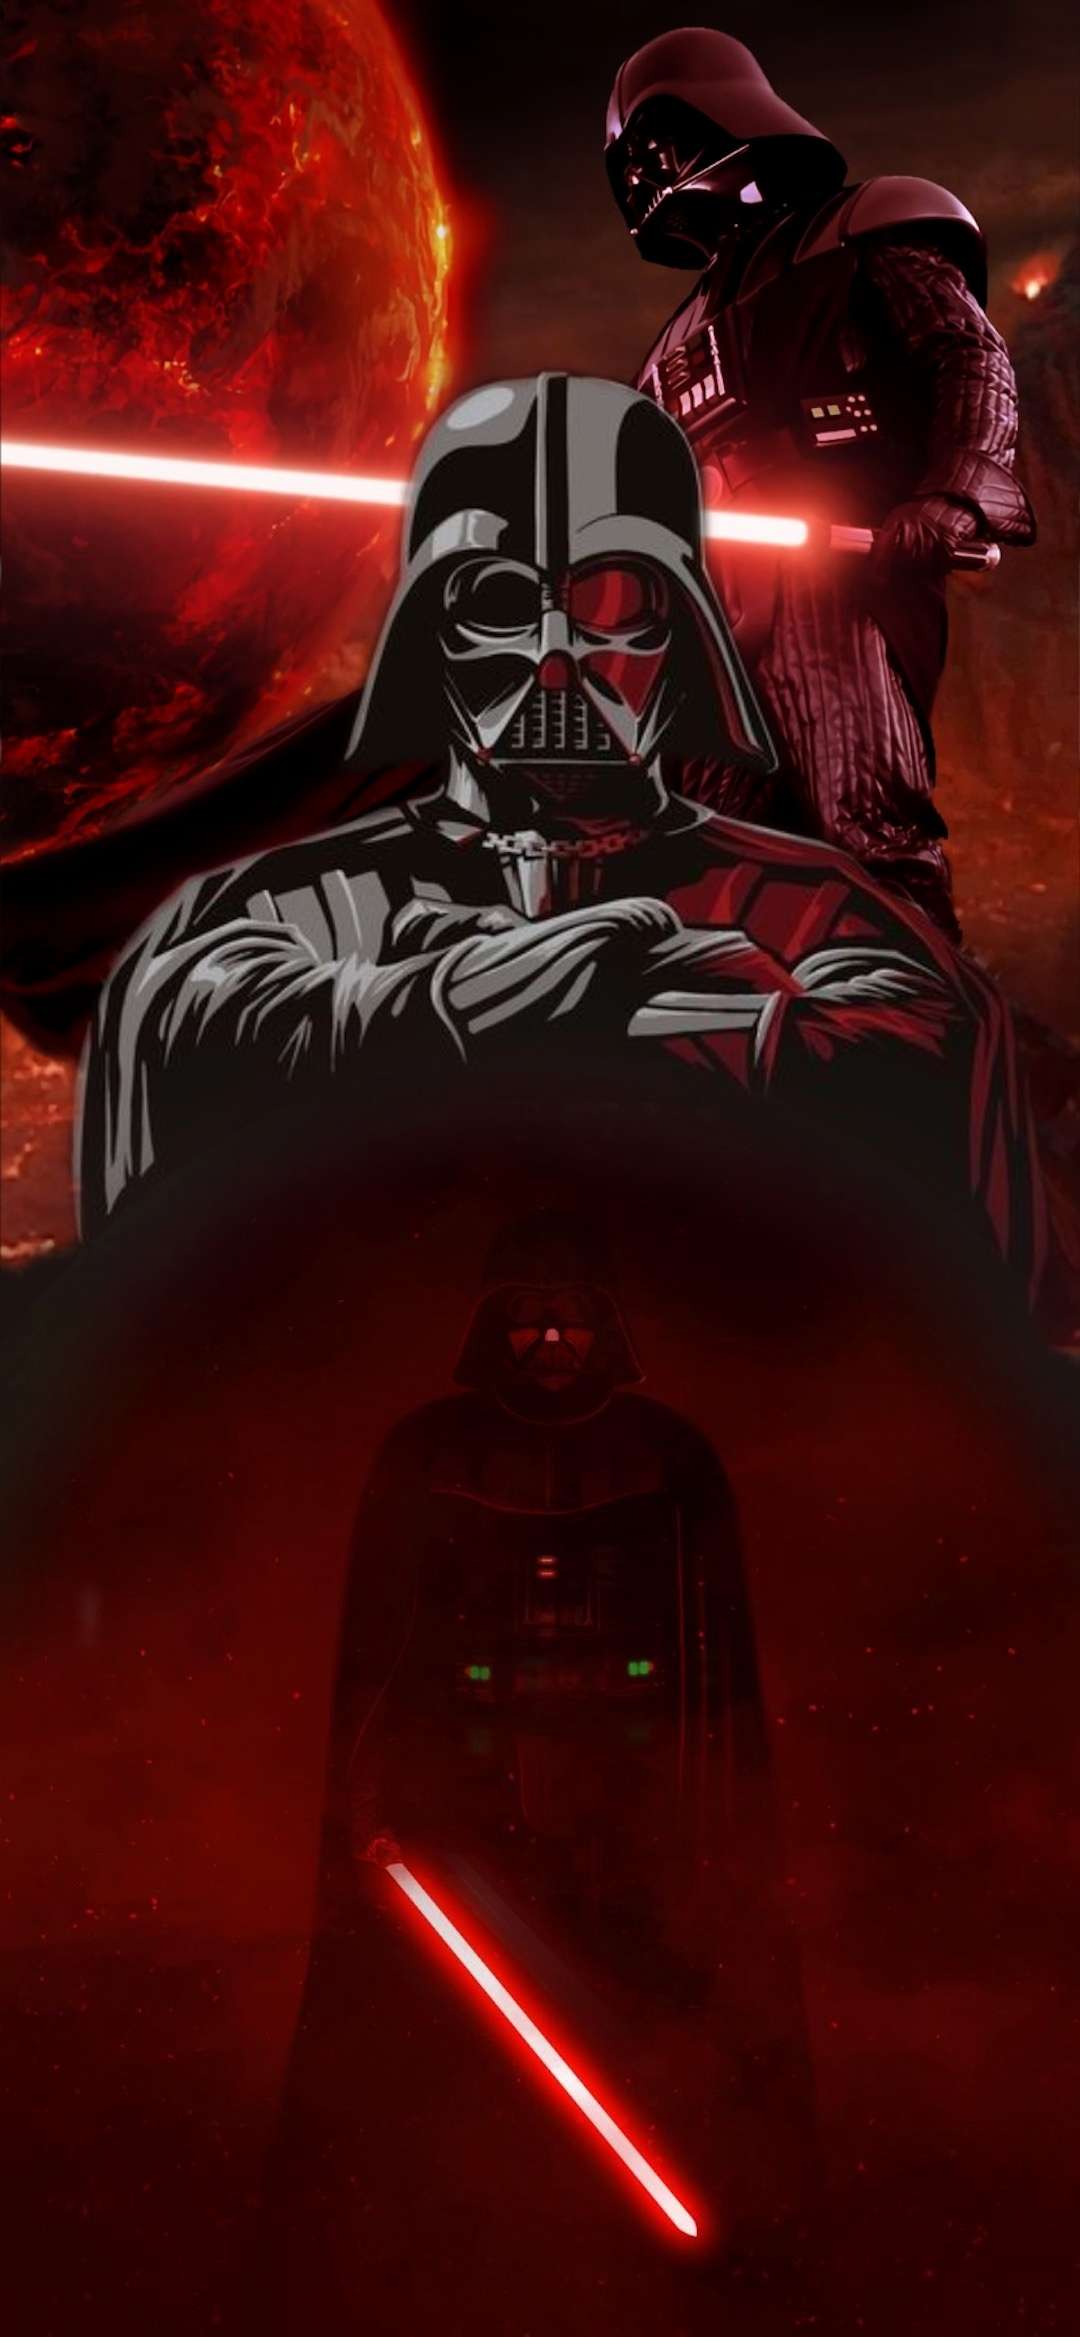 Darth Vader Star Wars Wallpaper iPhone